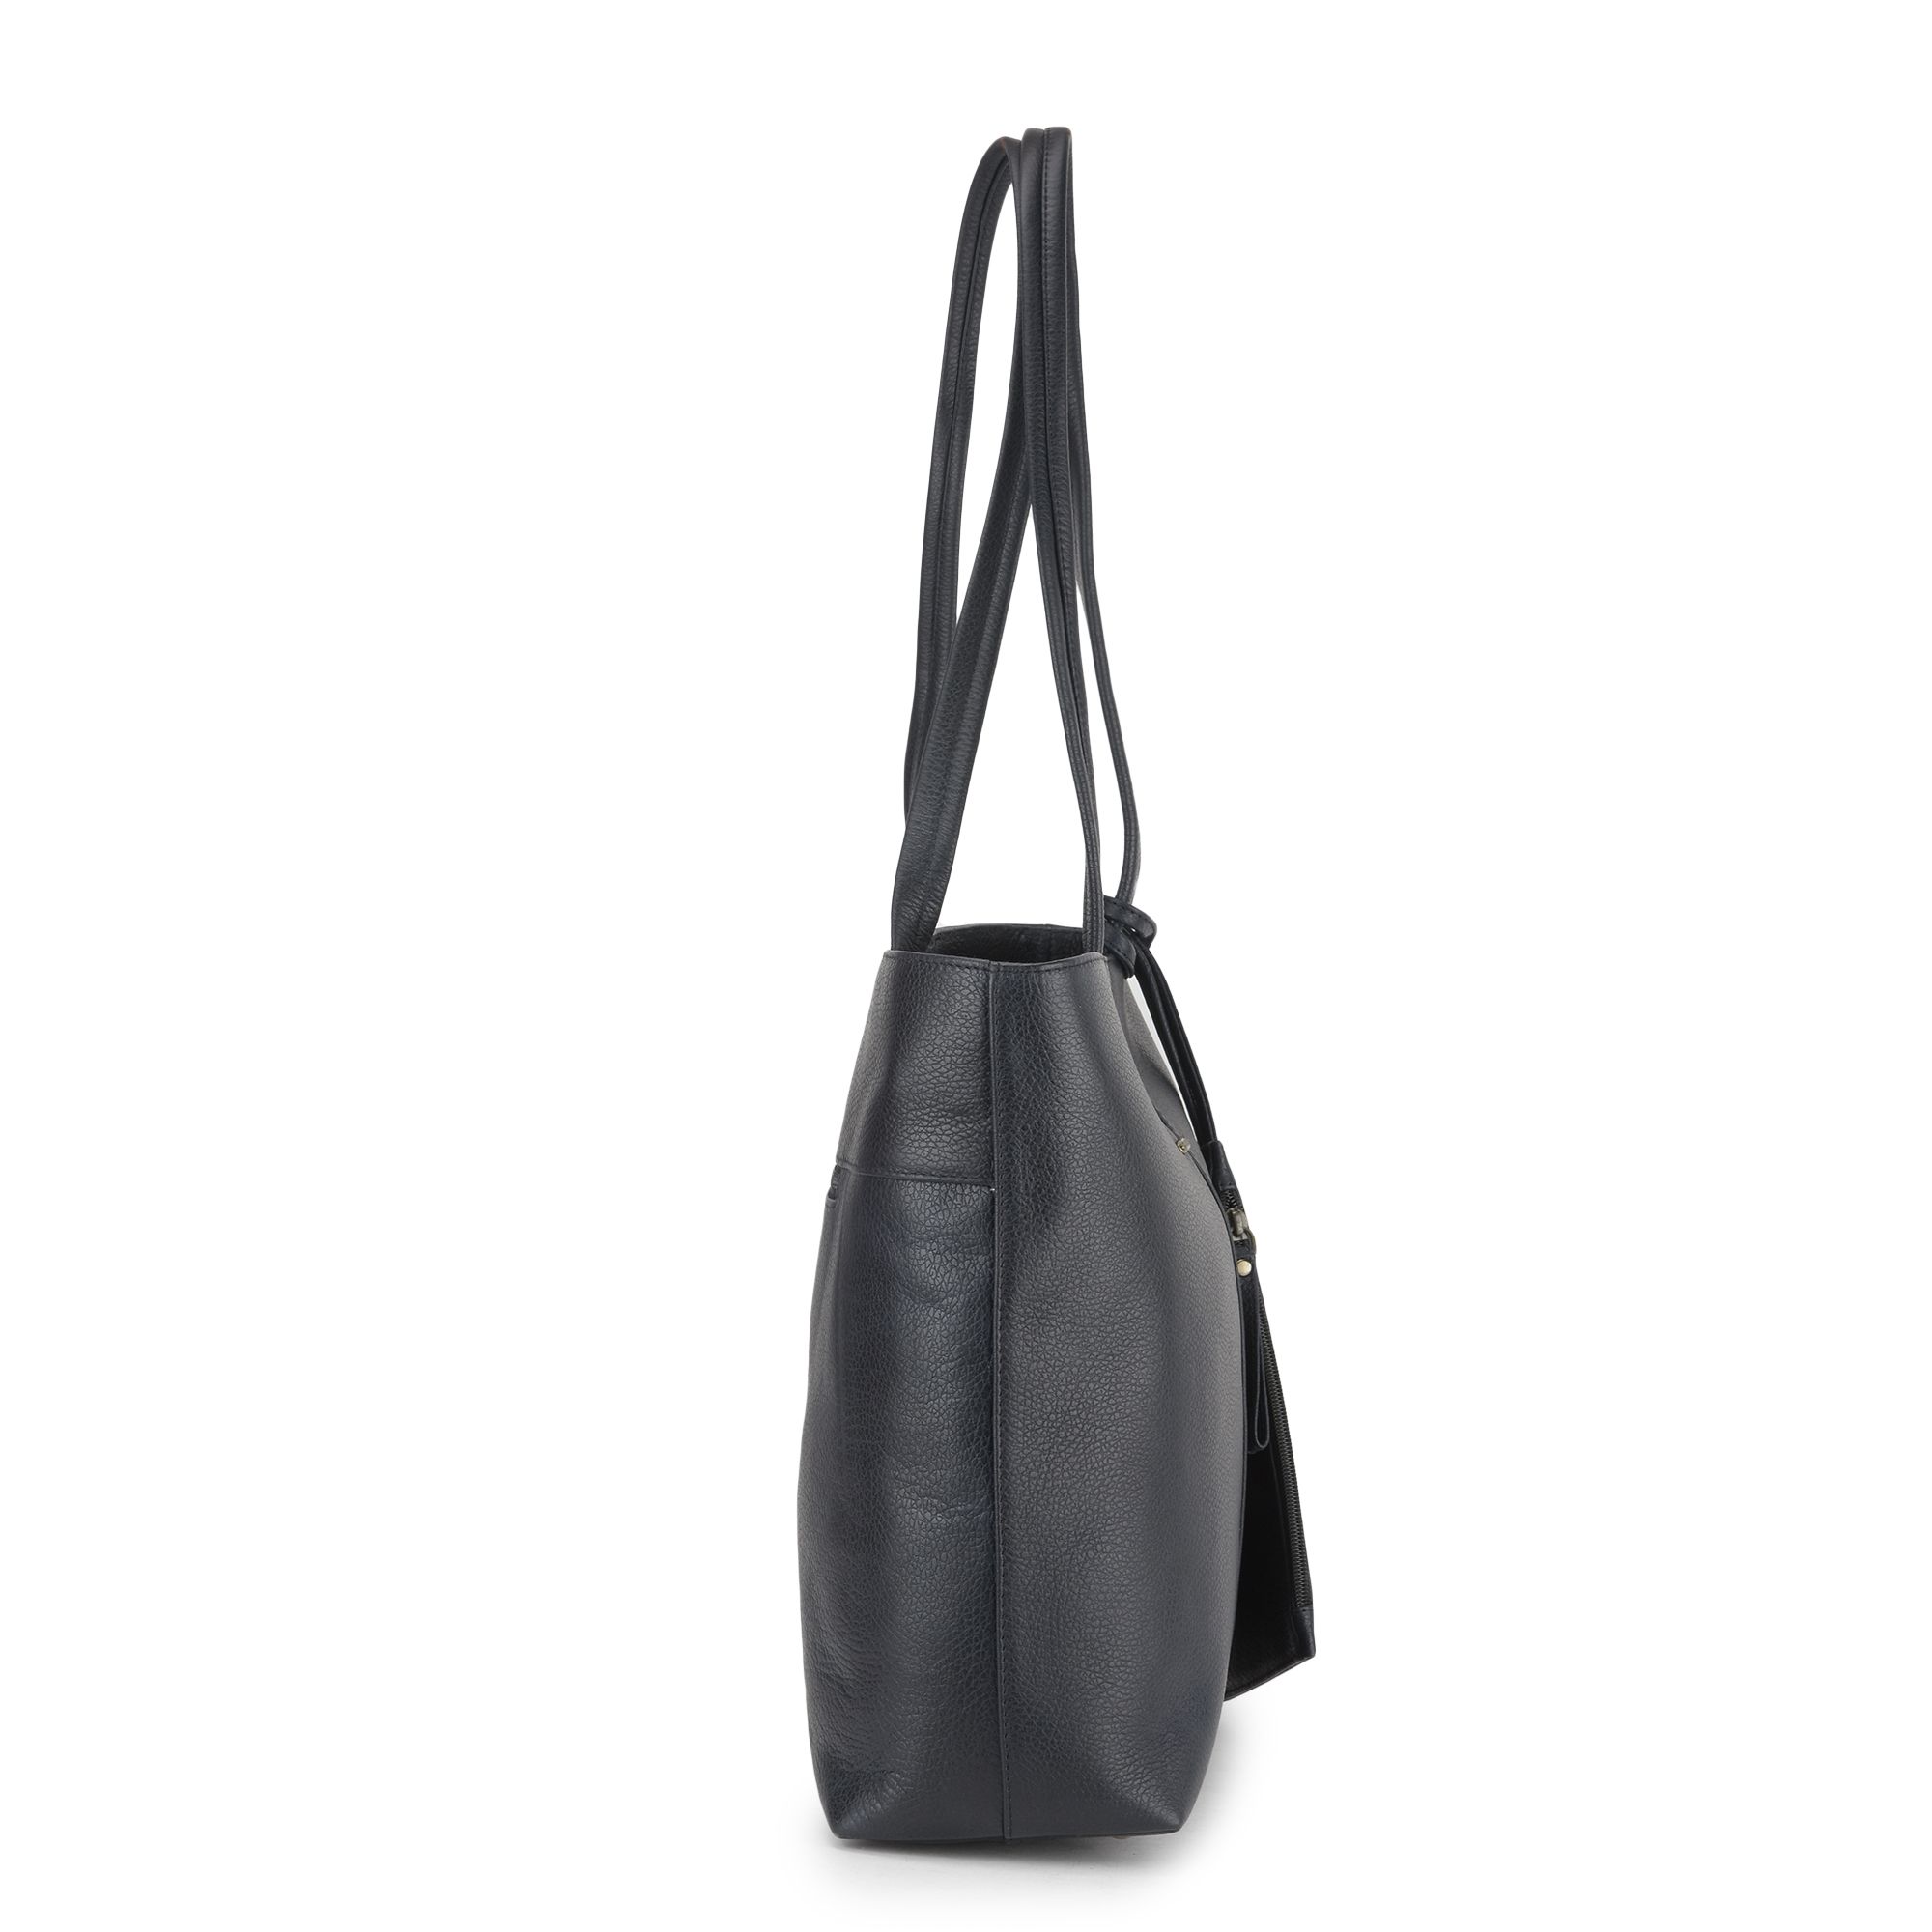 Black tote bag for women